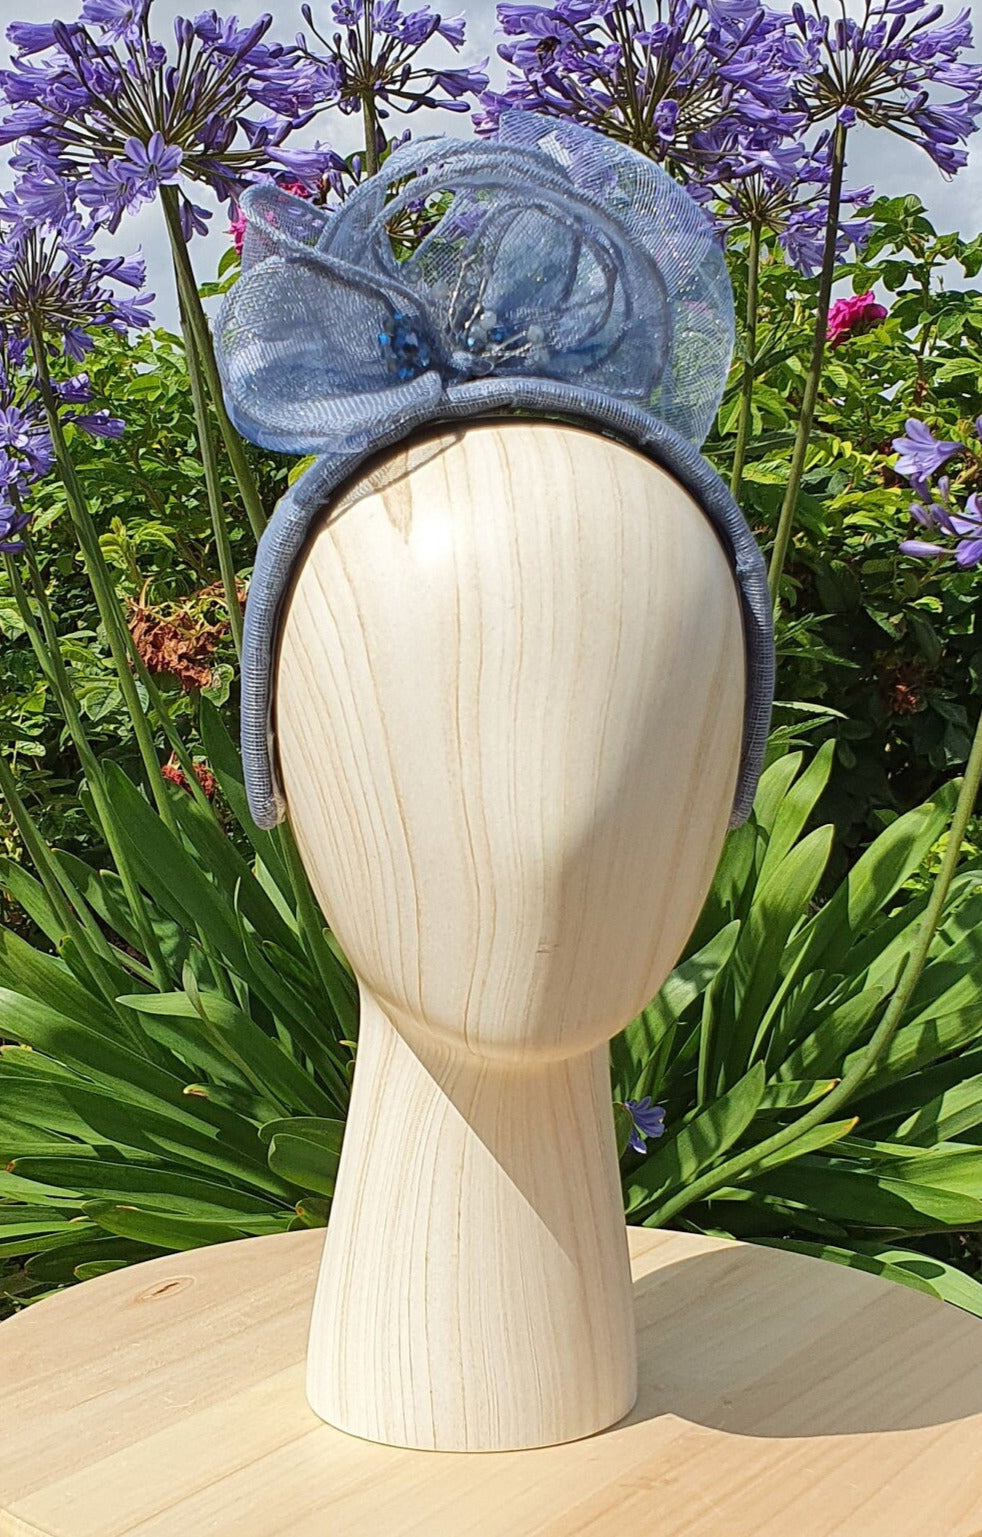 Elegante diadema azul hecha a mano con sinamay gris - Estilo elegante para cualquier ocasión, tiara de evento, tiara de boda